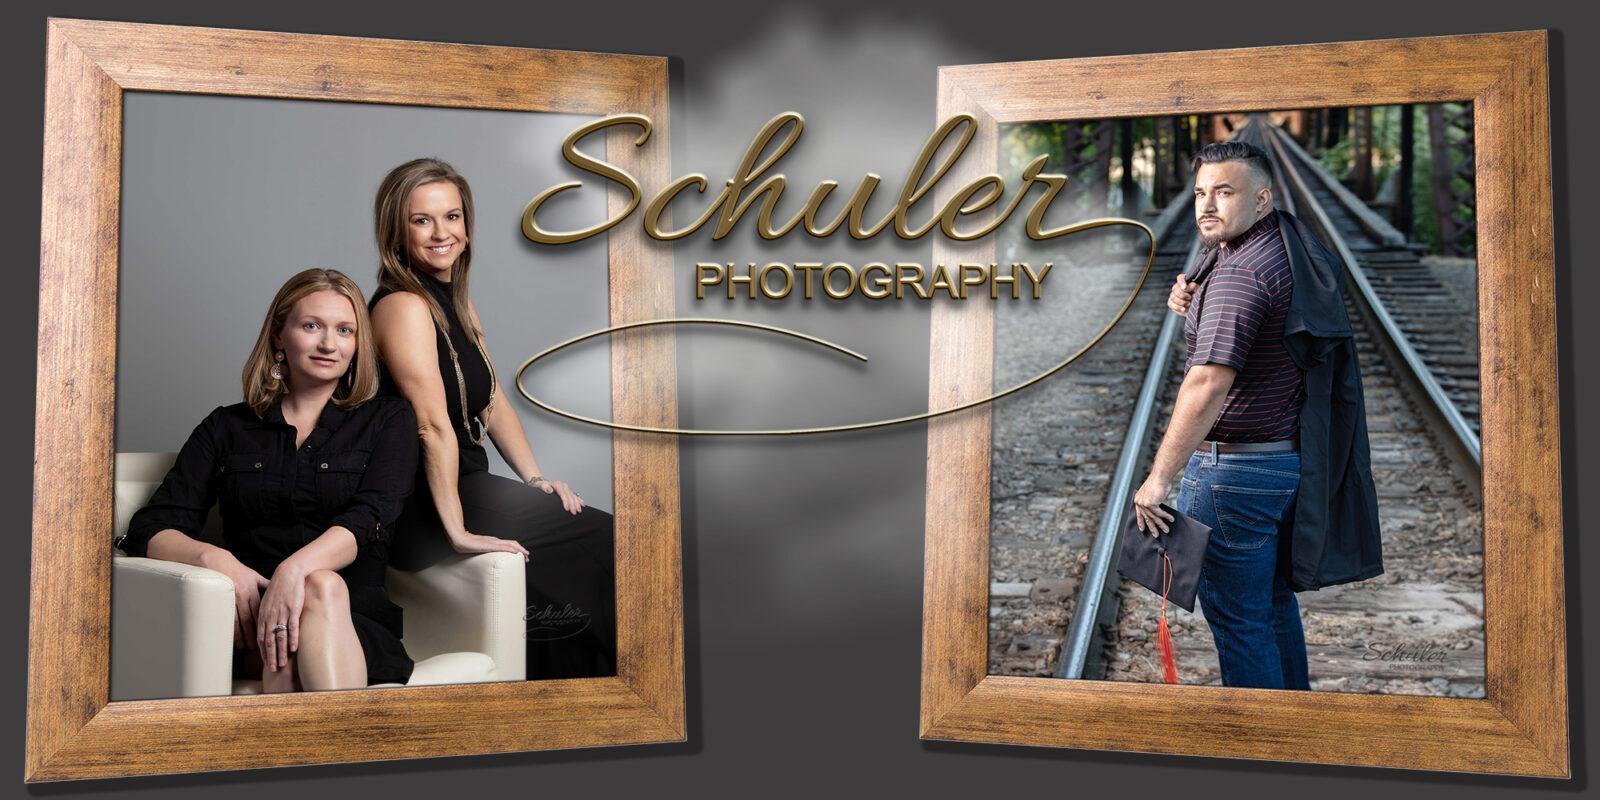 Schuler Photography, LLC